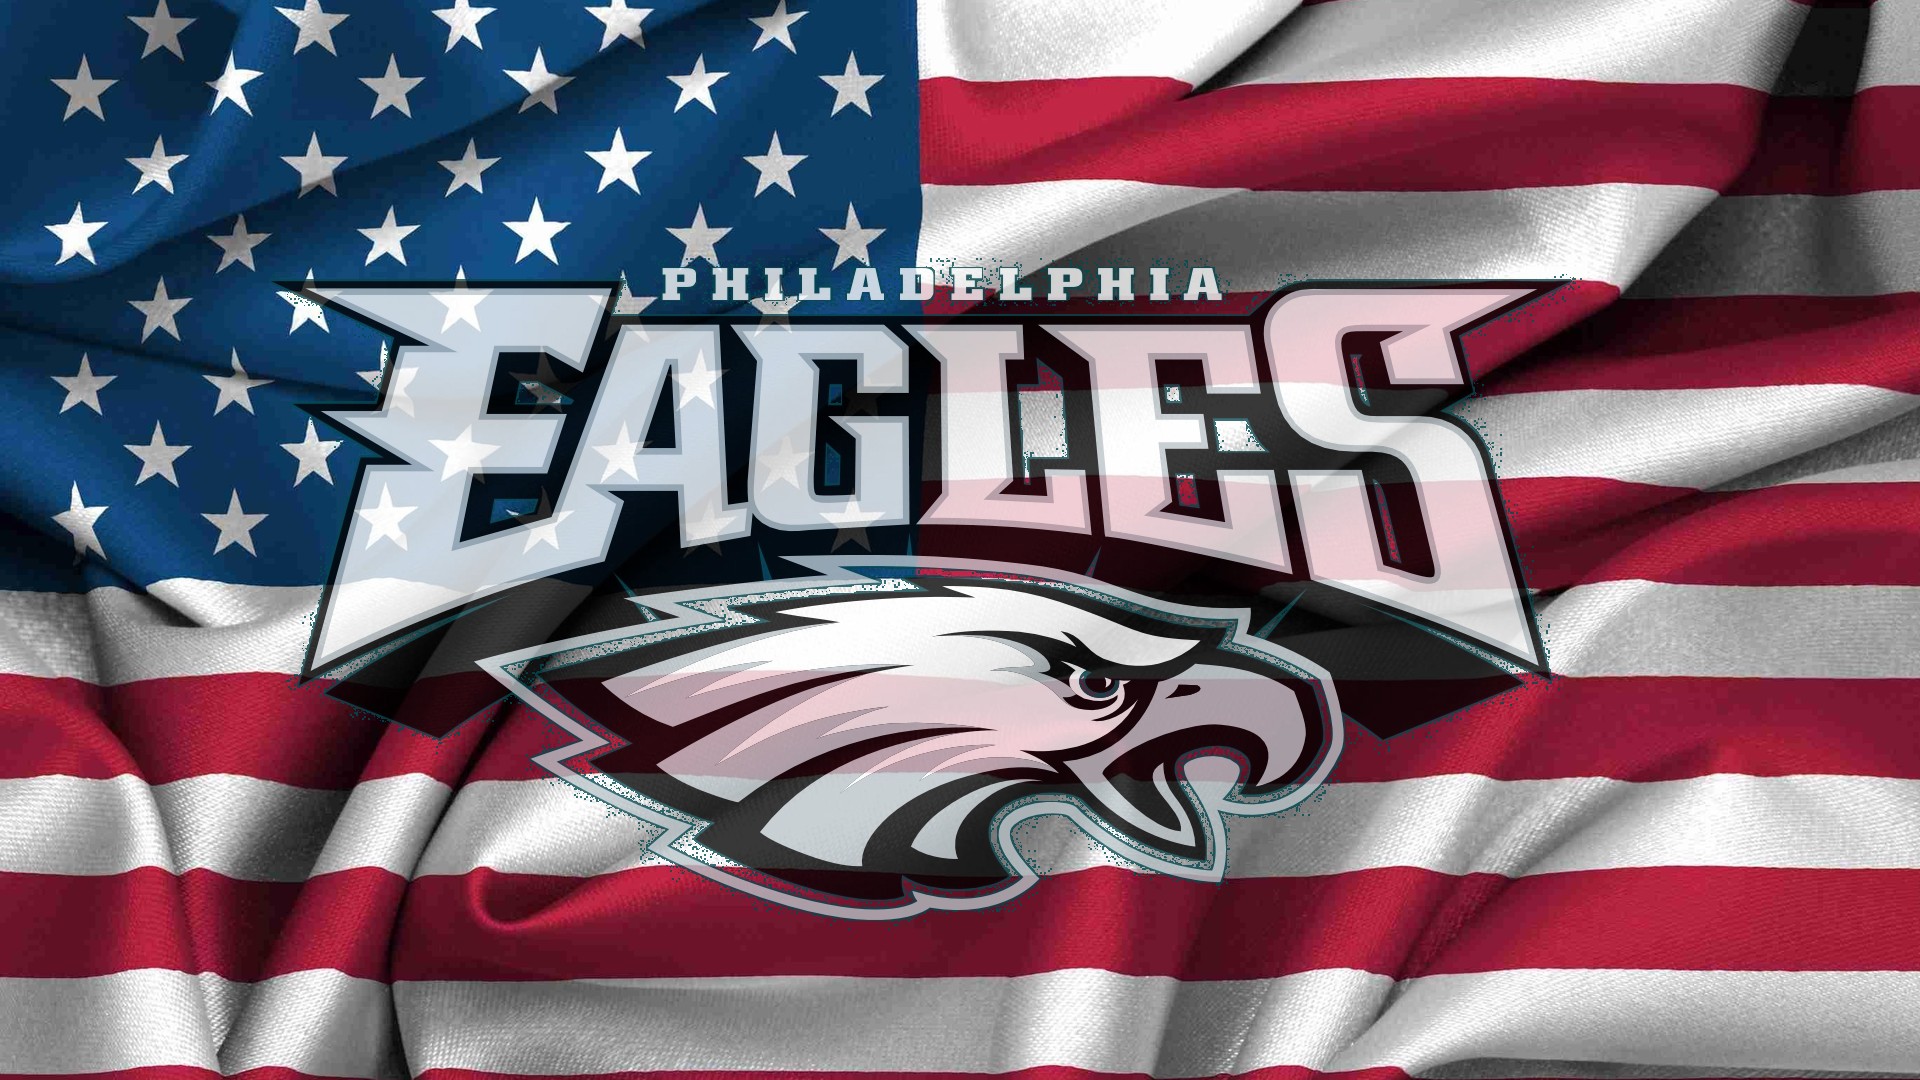 Philadelphia Eagles Wallpapers - WallpaperSafari